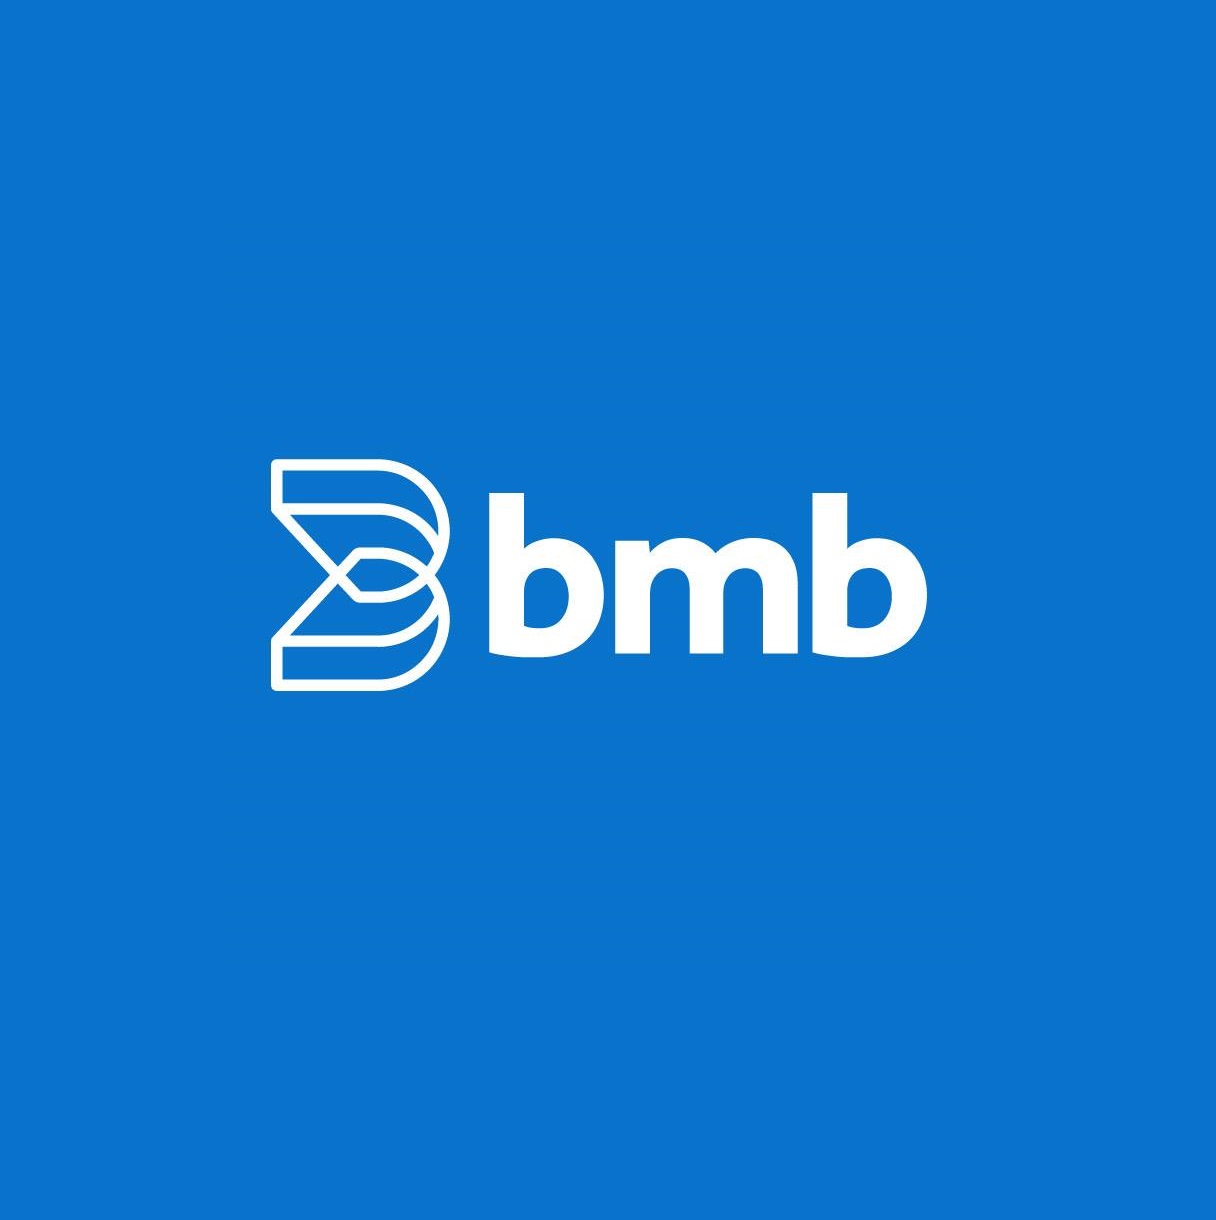 BMB Group